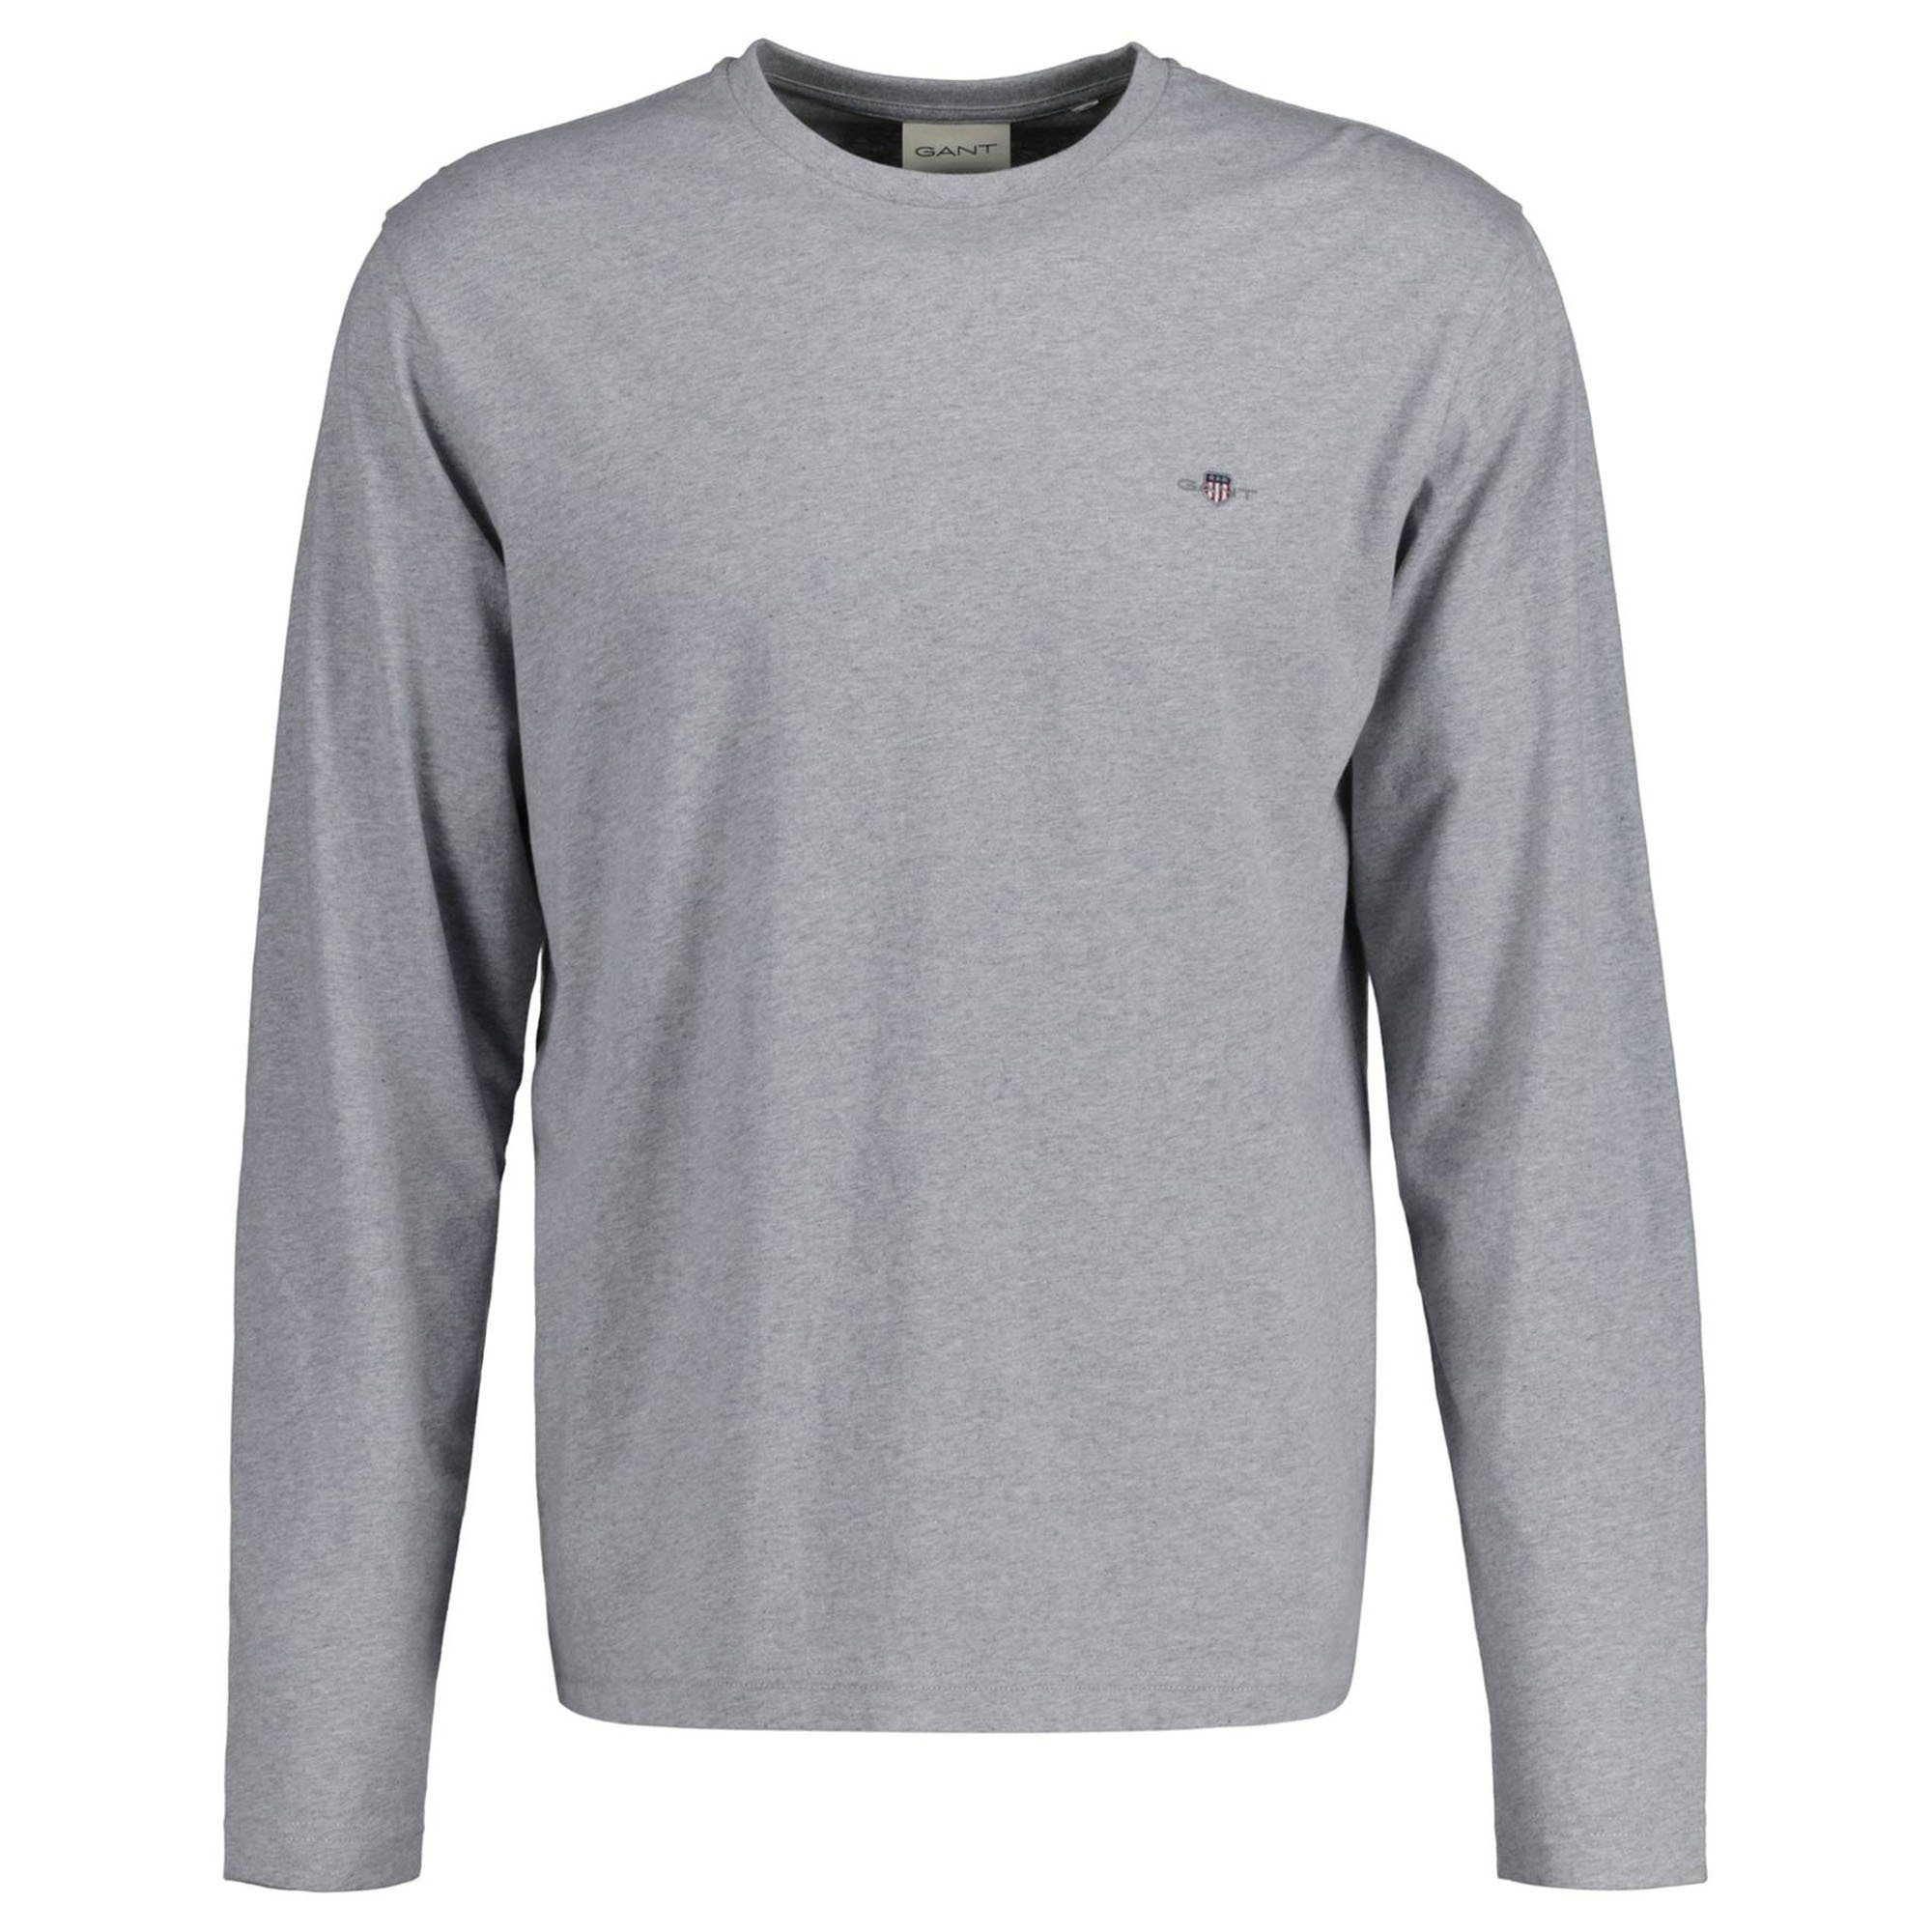 Gant T-Shirt Herren Longsleeve - REGULAR SHIELD LS, Shirt Grau